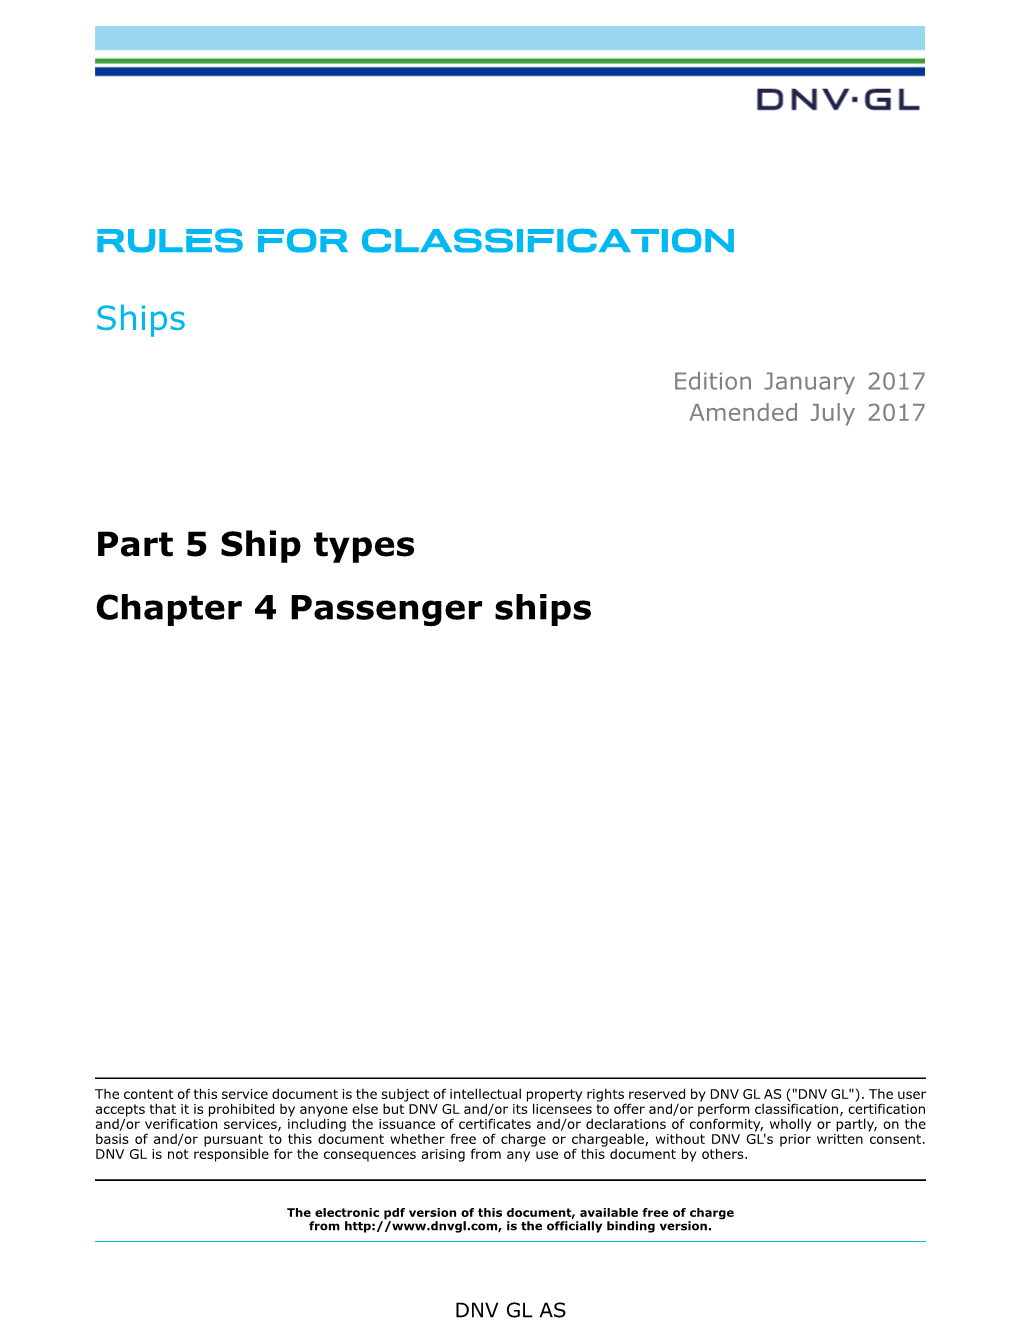 DNVGL-RU-SHIP Pt.5 Ch.4 Passenger Ships